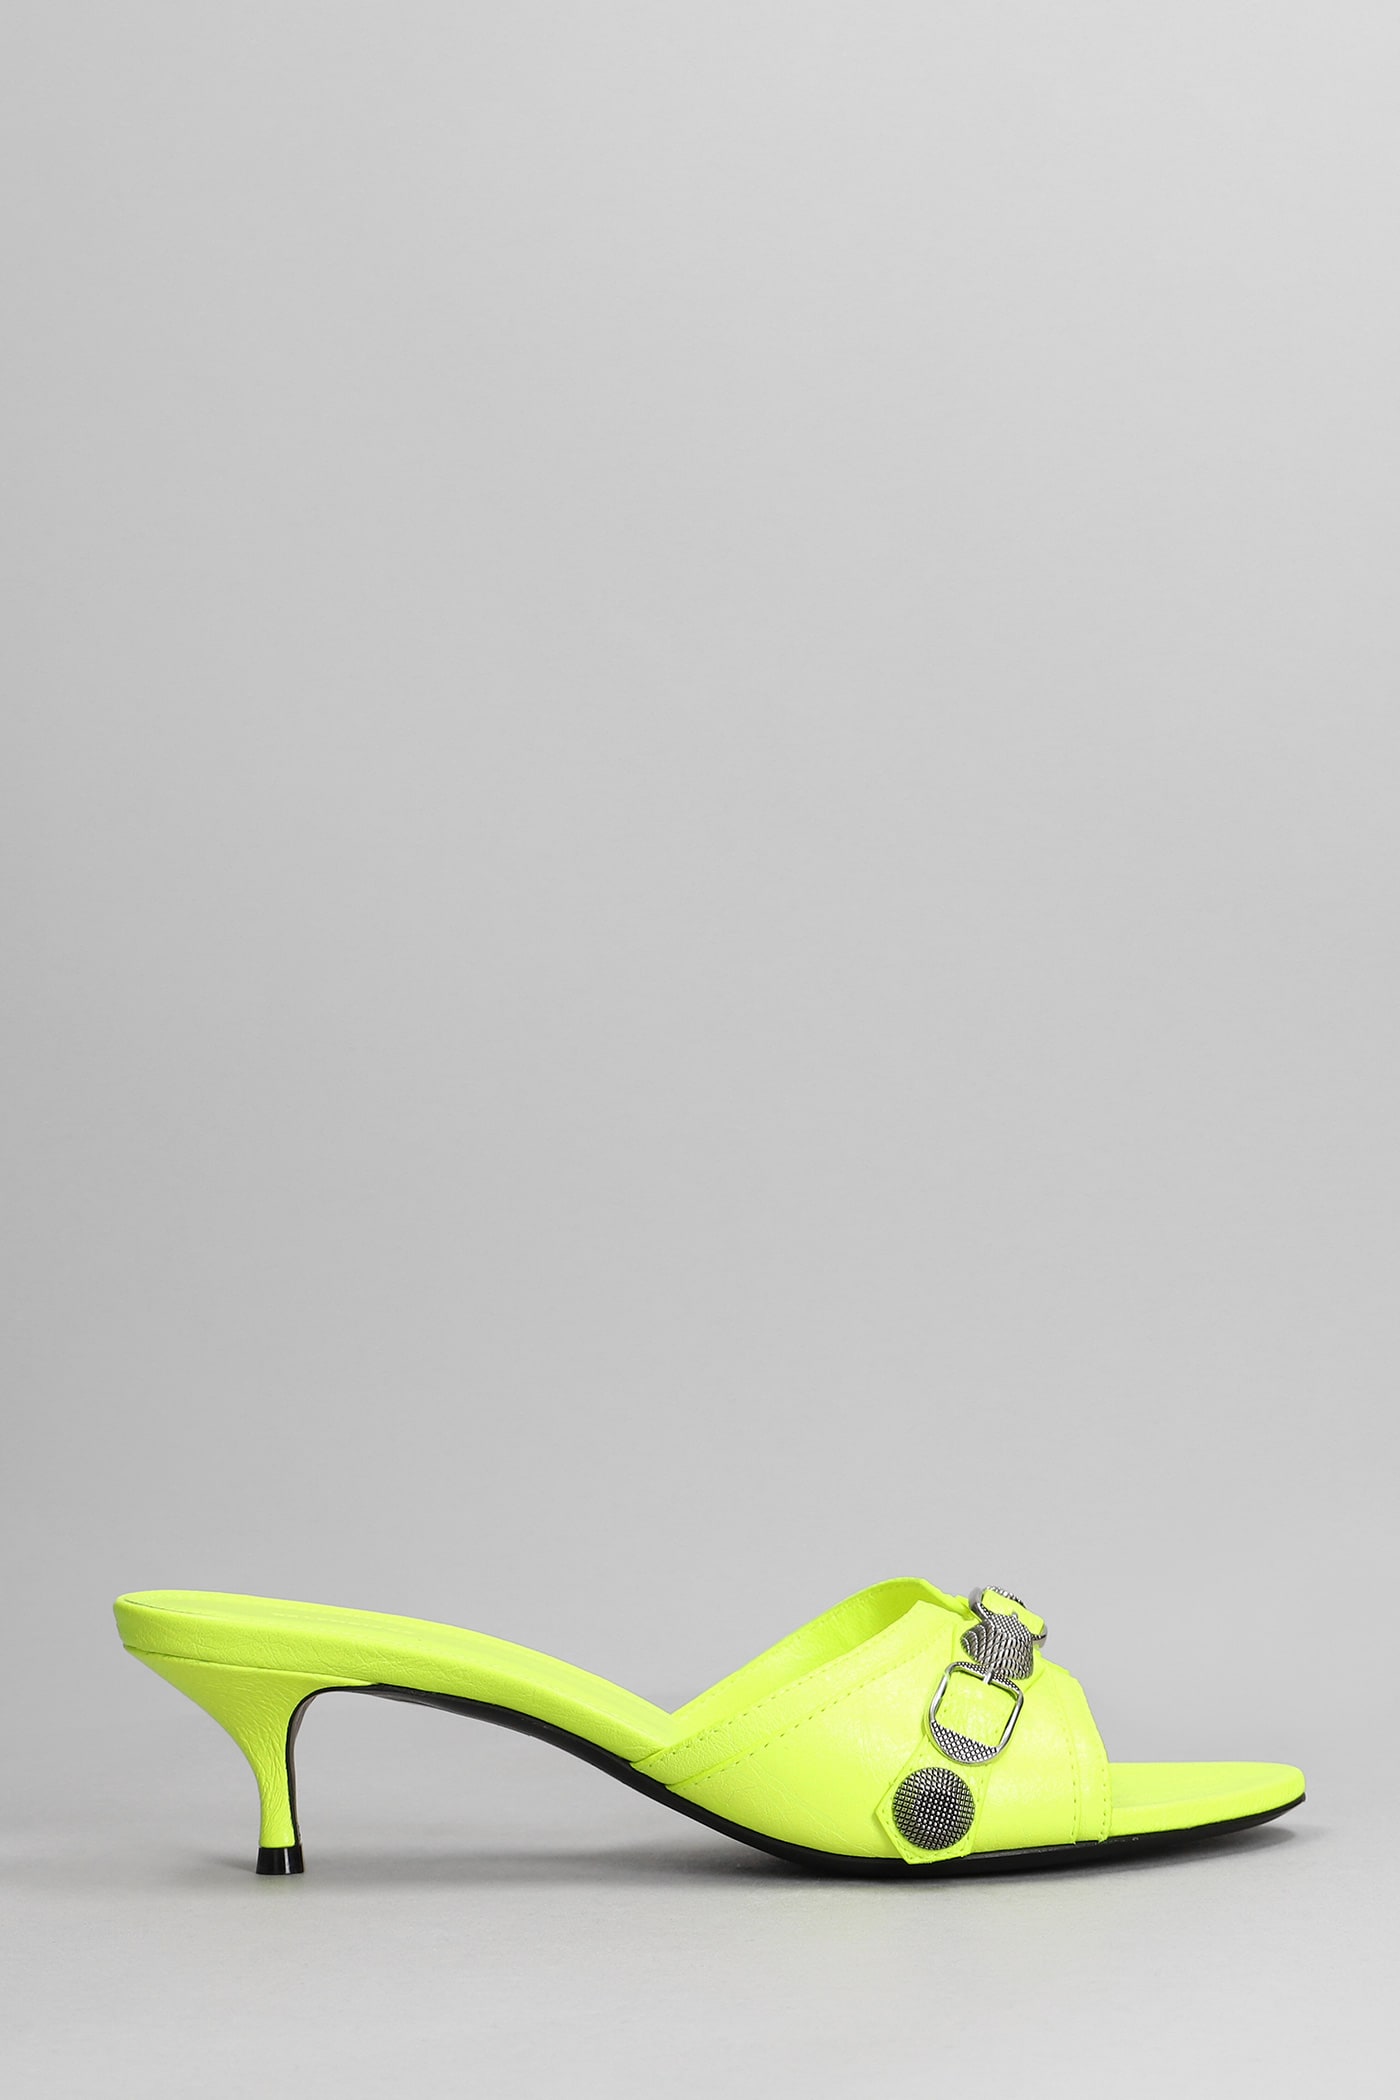 Balenciaga Slipper-mule In Yellow Leather